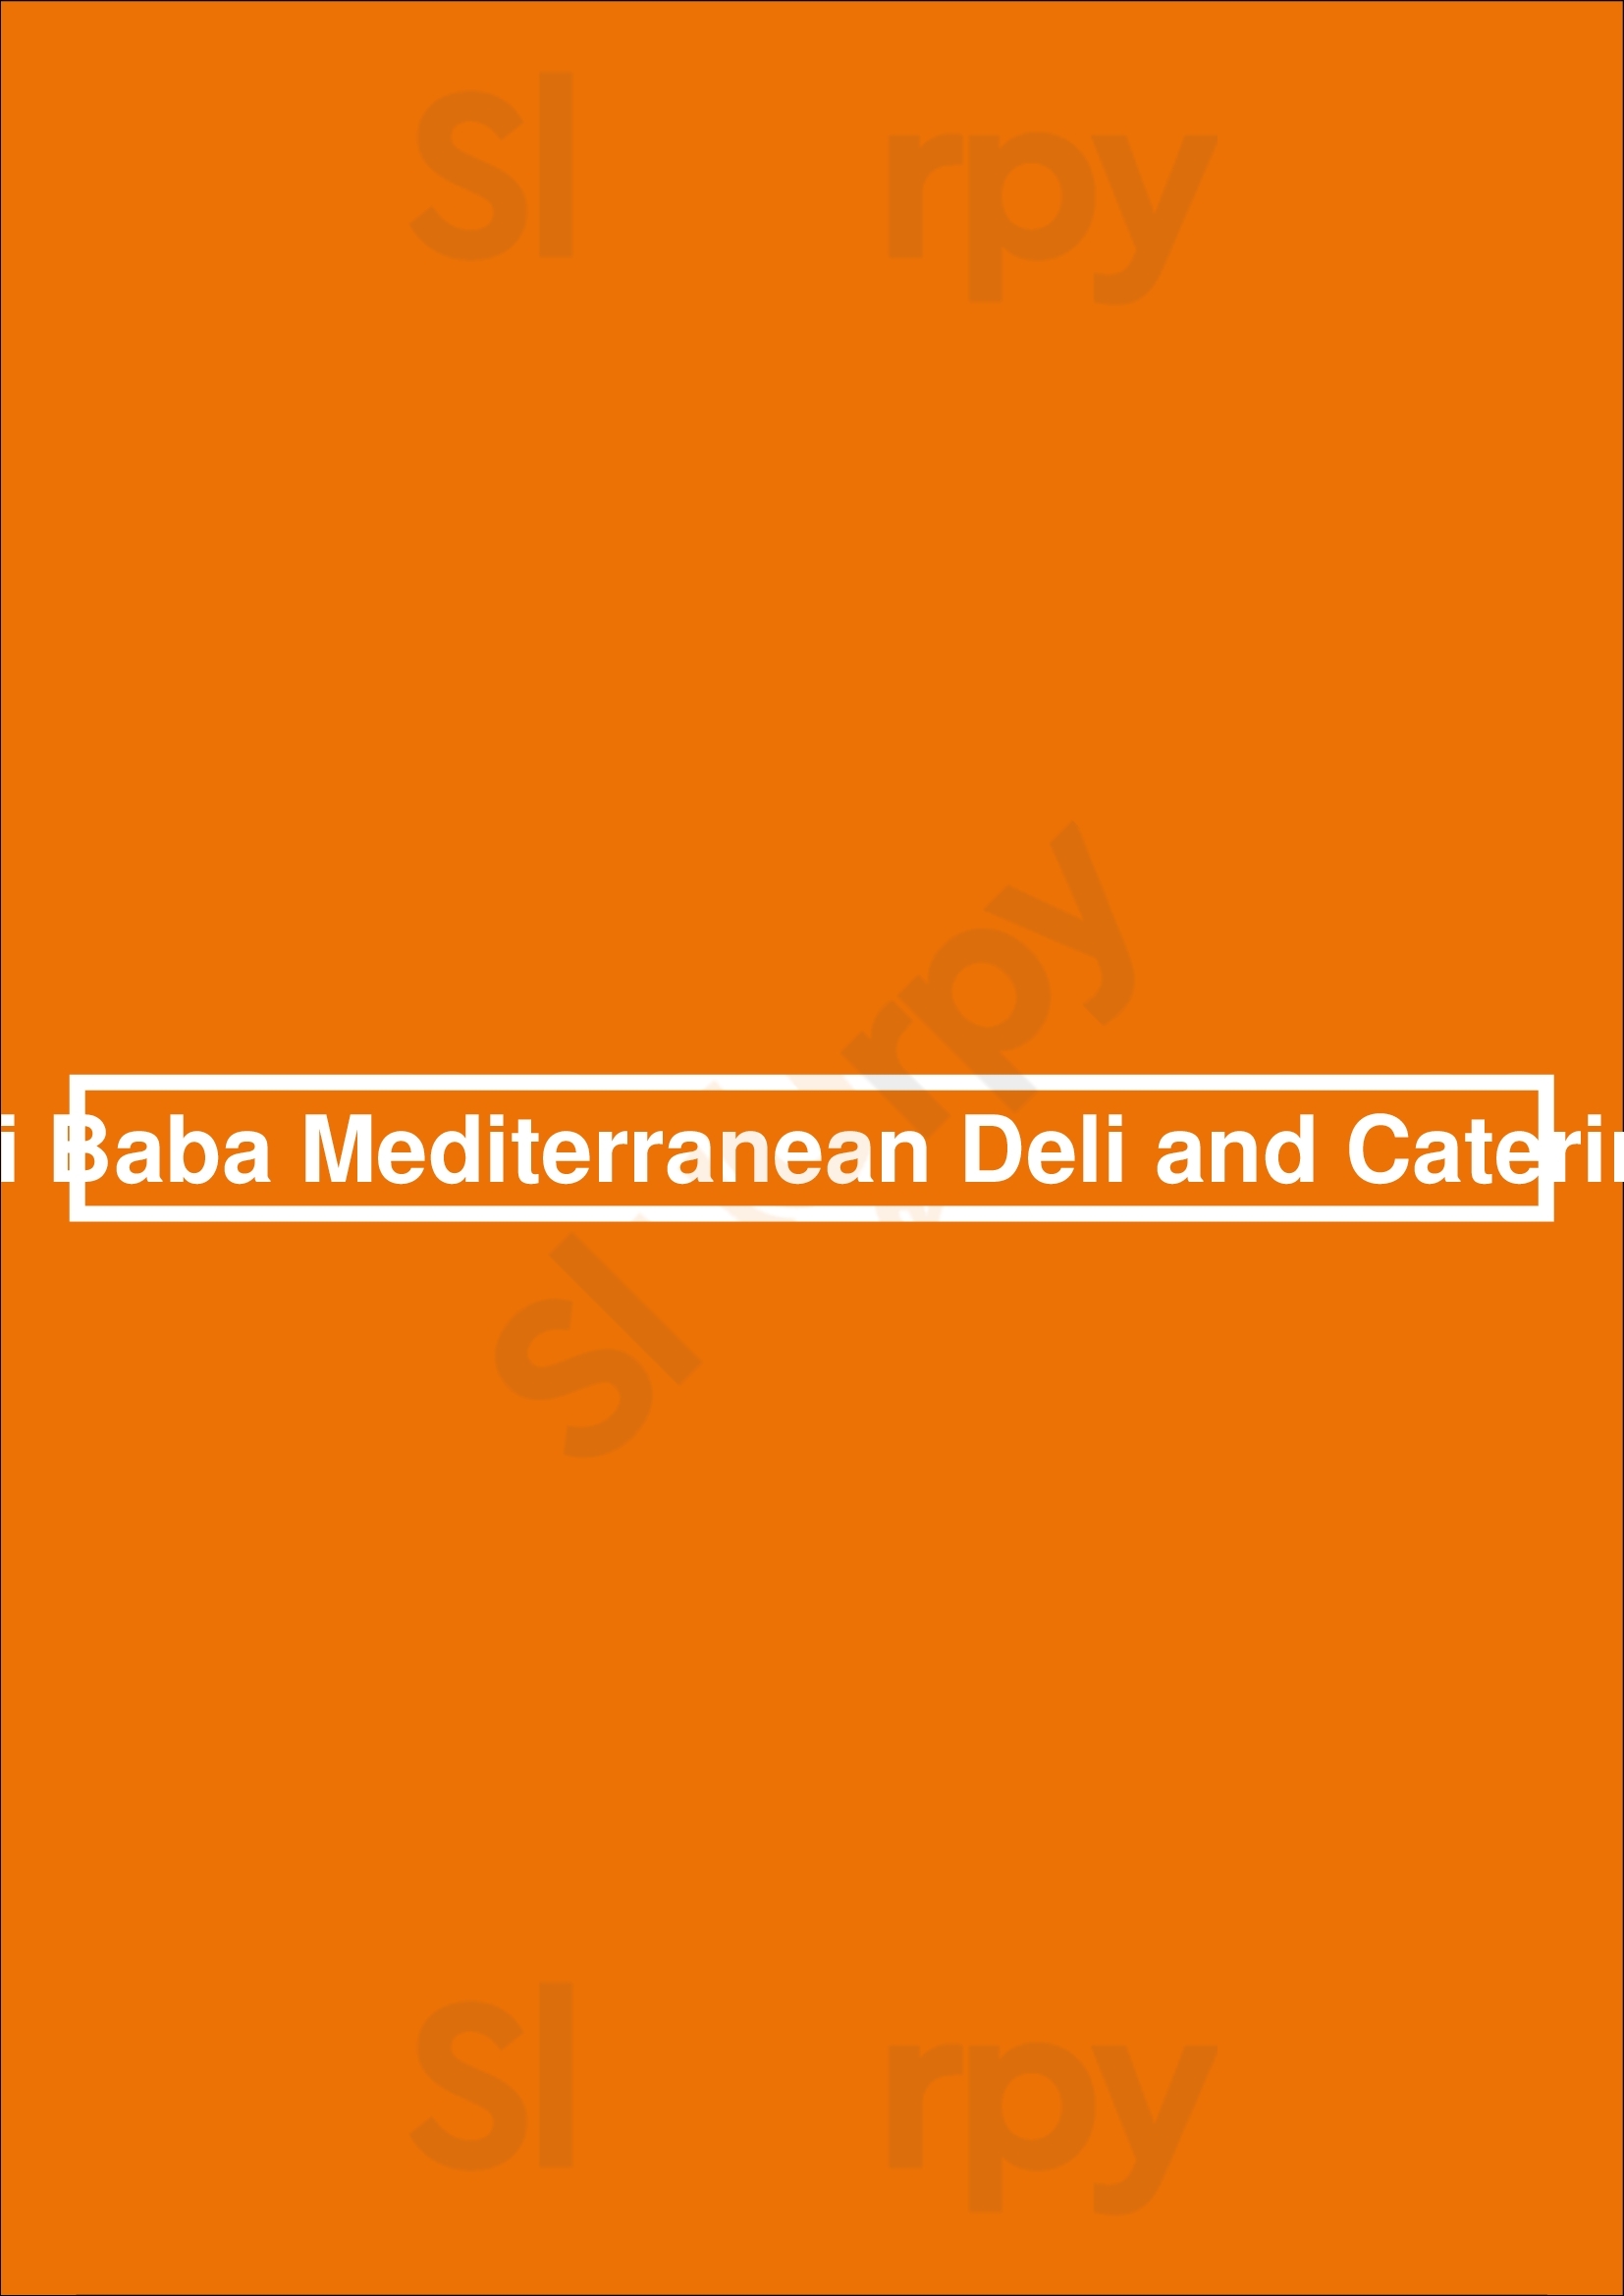 Ali Baba Mediterranean Deli And Catering Charleston Menu - 1